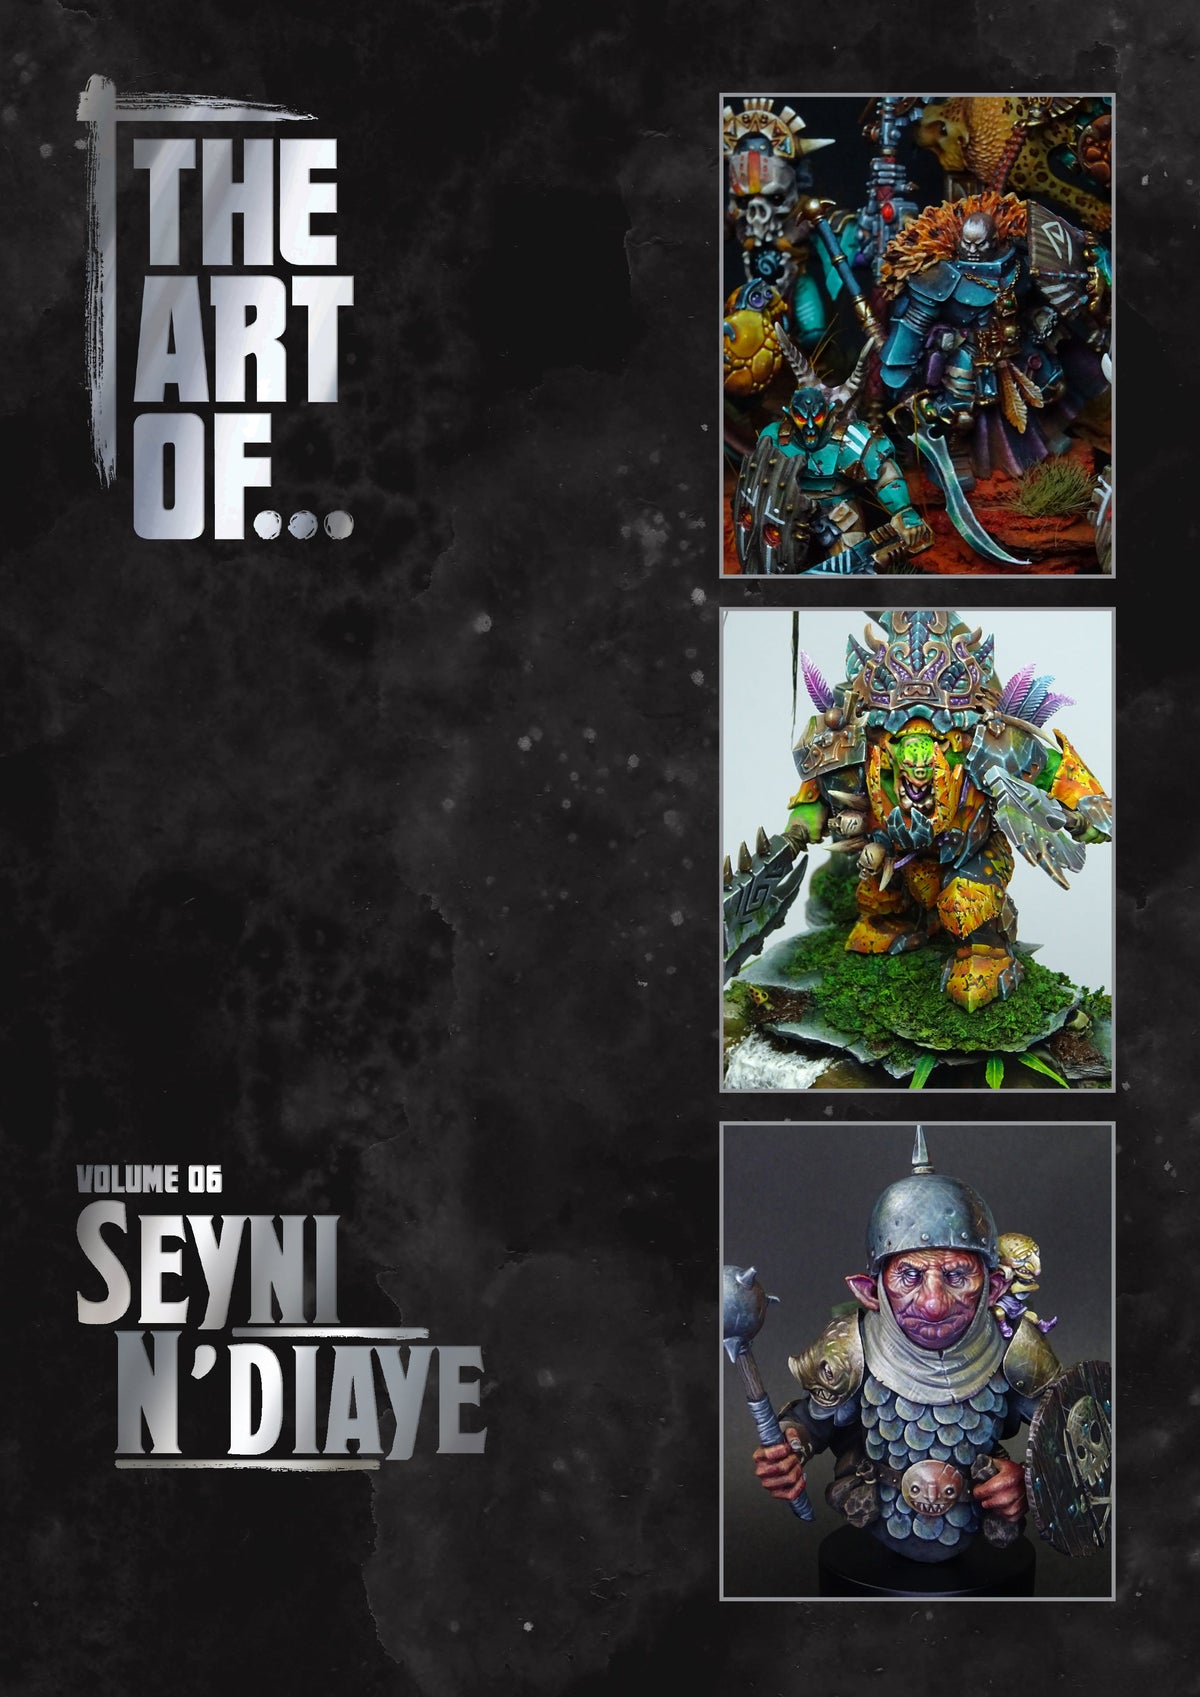 THE ART OF... Volume Six - Seyni N'diaye